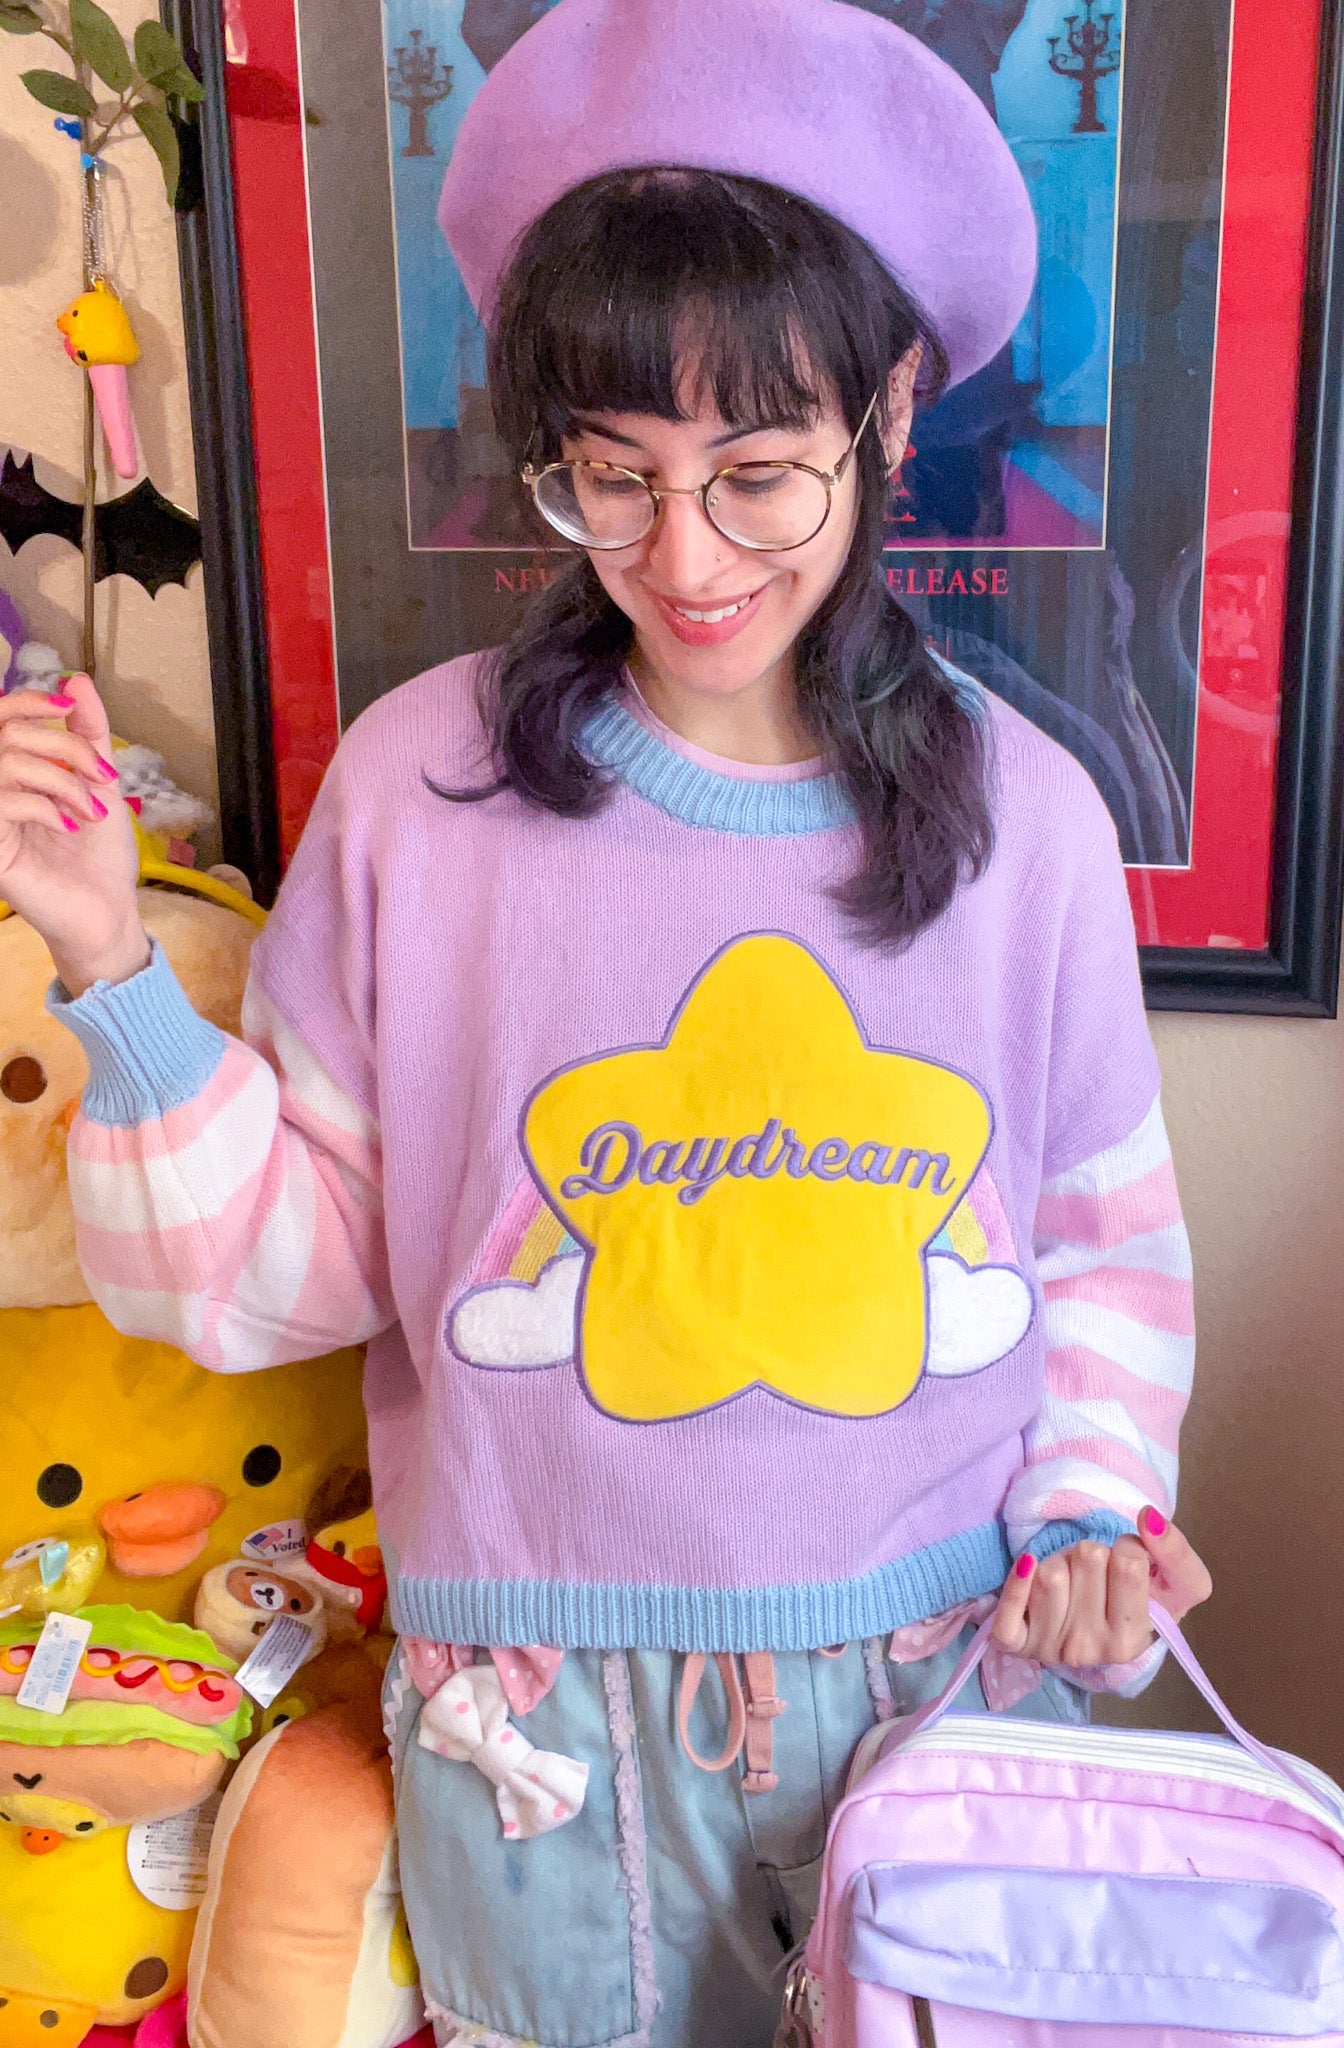 Daydream Crop Sweater